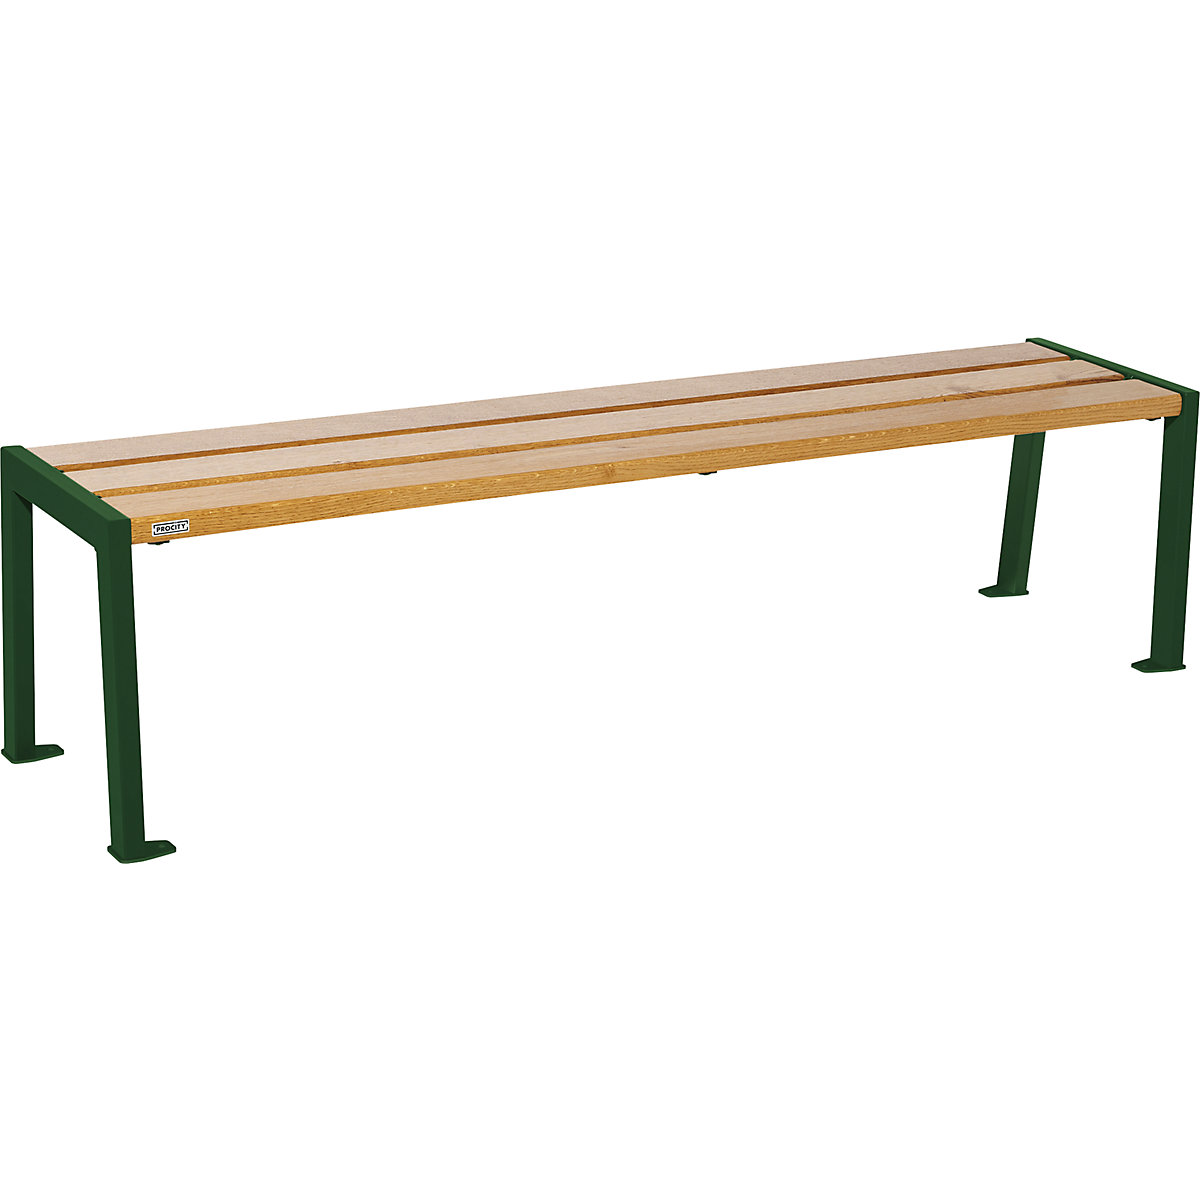 SILAOS® wooden bench without back rest – PROCITY, height 437 mm, length 1800 mm, moss green, light oak finish-1